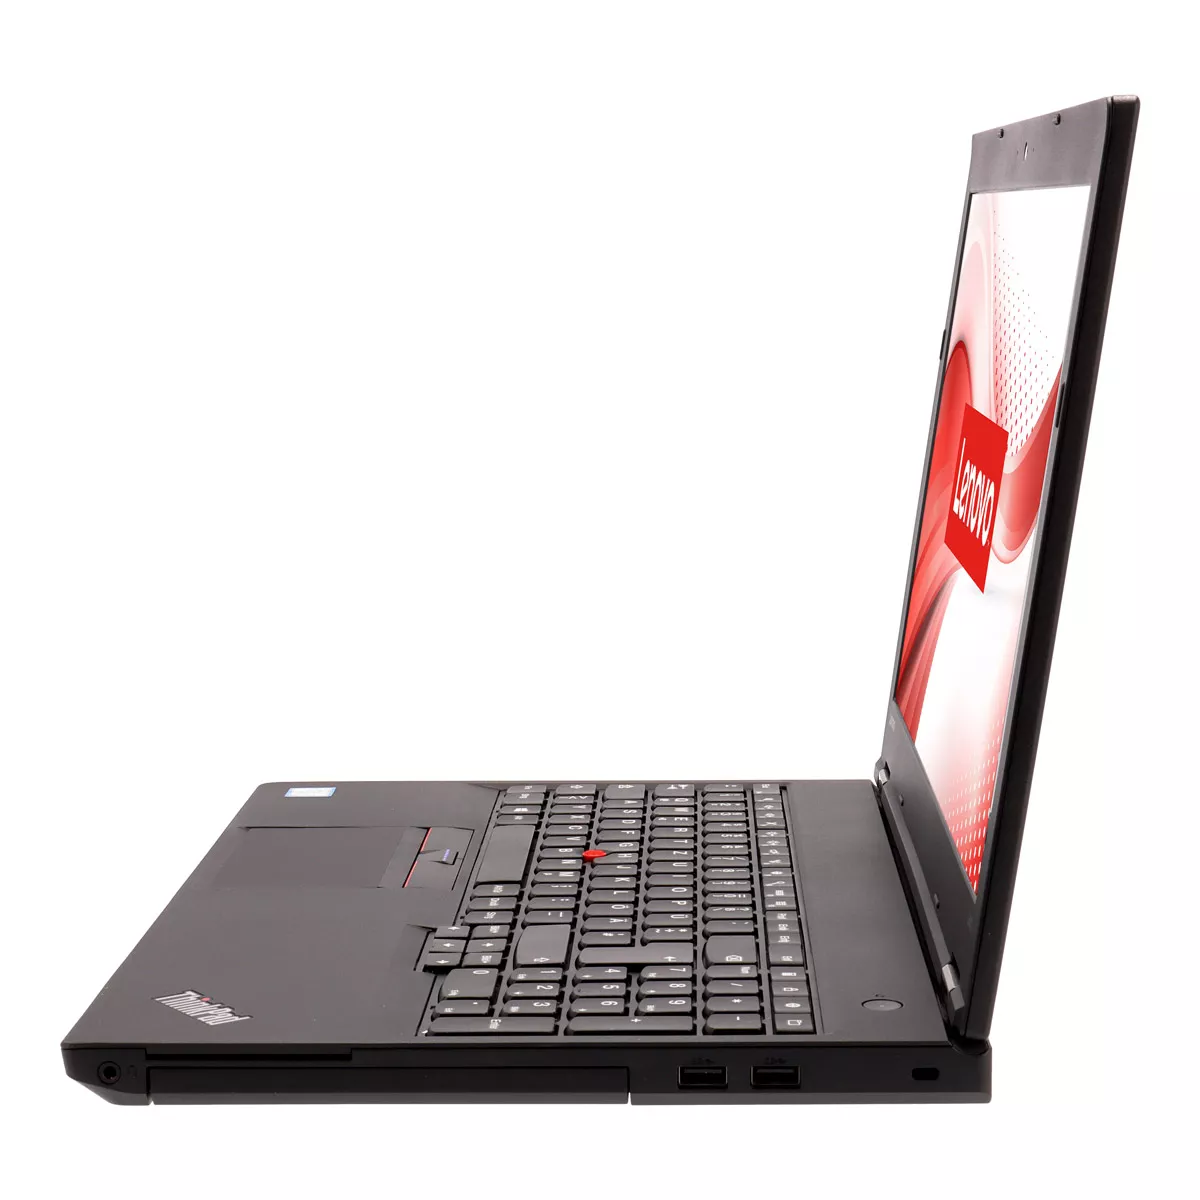 Lenovo ThinkPad L570 Core i5 6300U Full-HD 240 GB SSD Webcam A